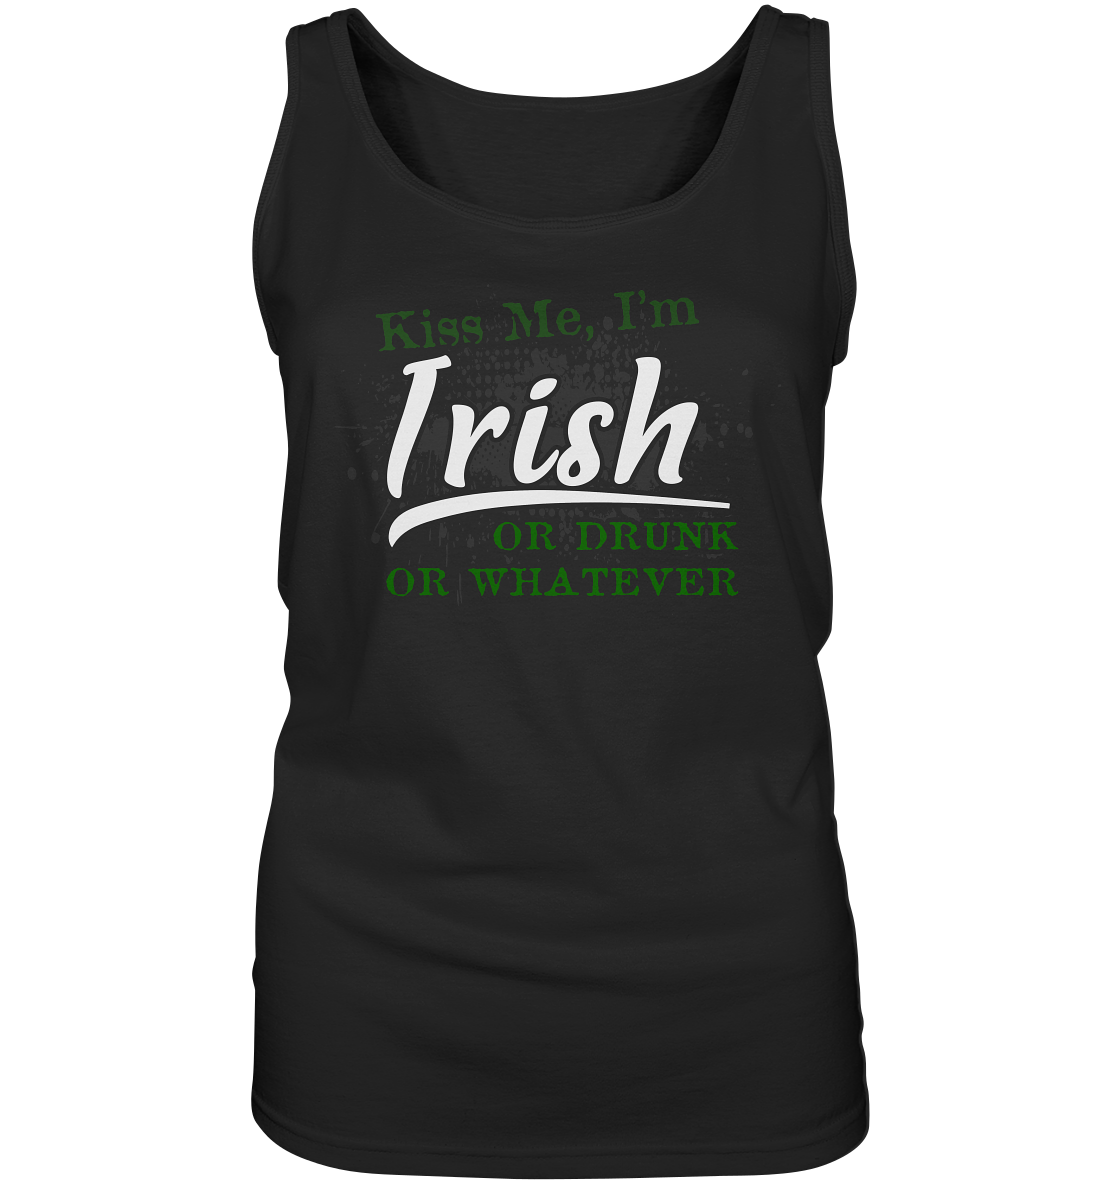 Kiss Me I'm Irish Or Drunk Or Whatever - Ladies Tank-Top